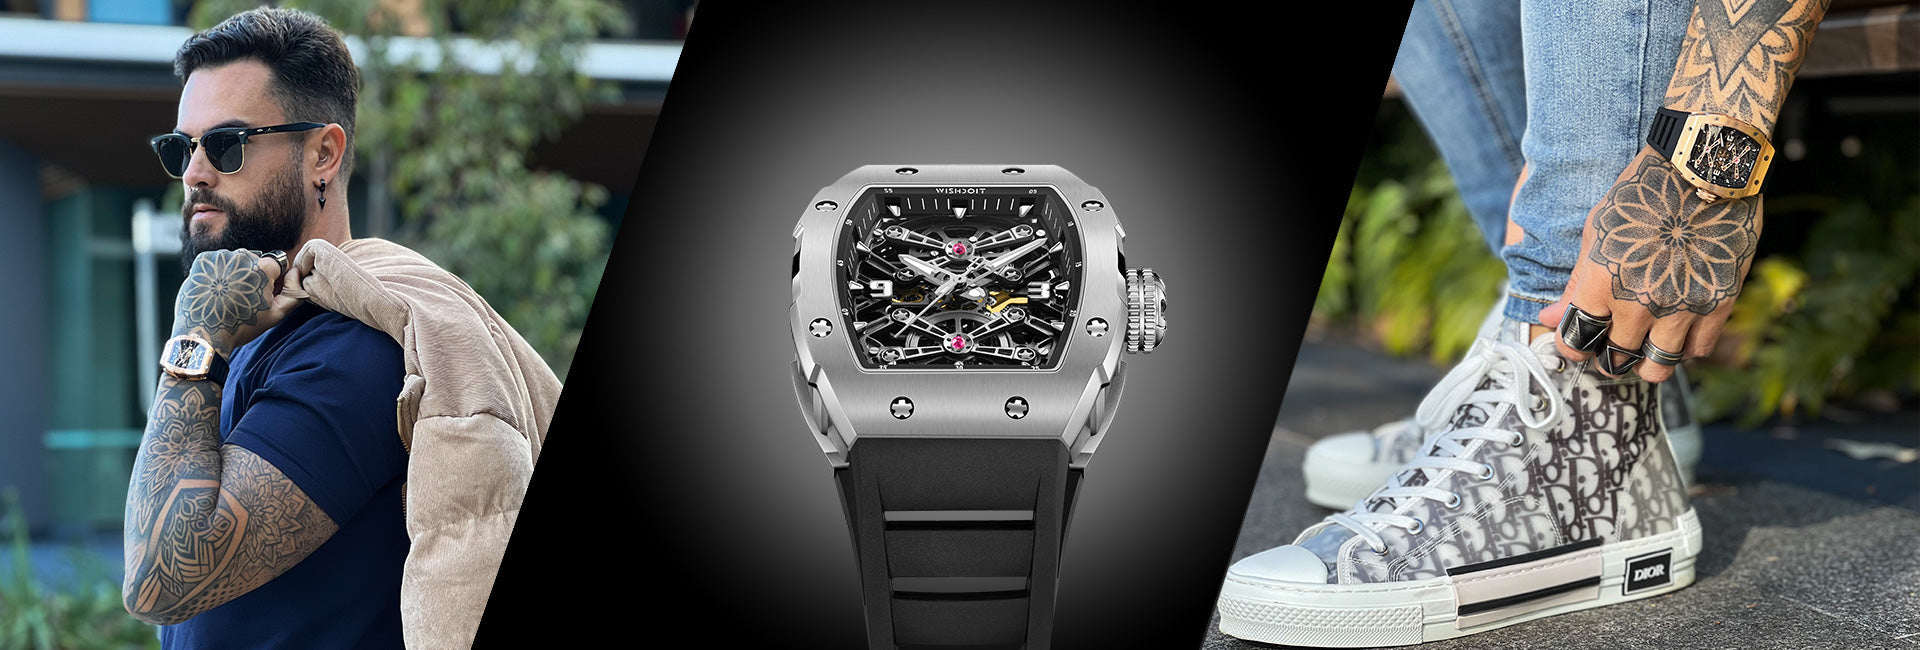 Wrist watches- Shop Affordable Luxury Wrist Watches  | Wishdoit watches